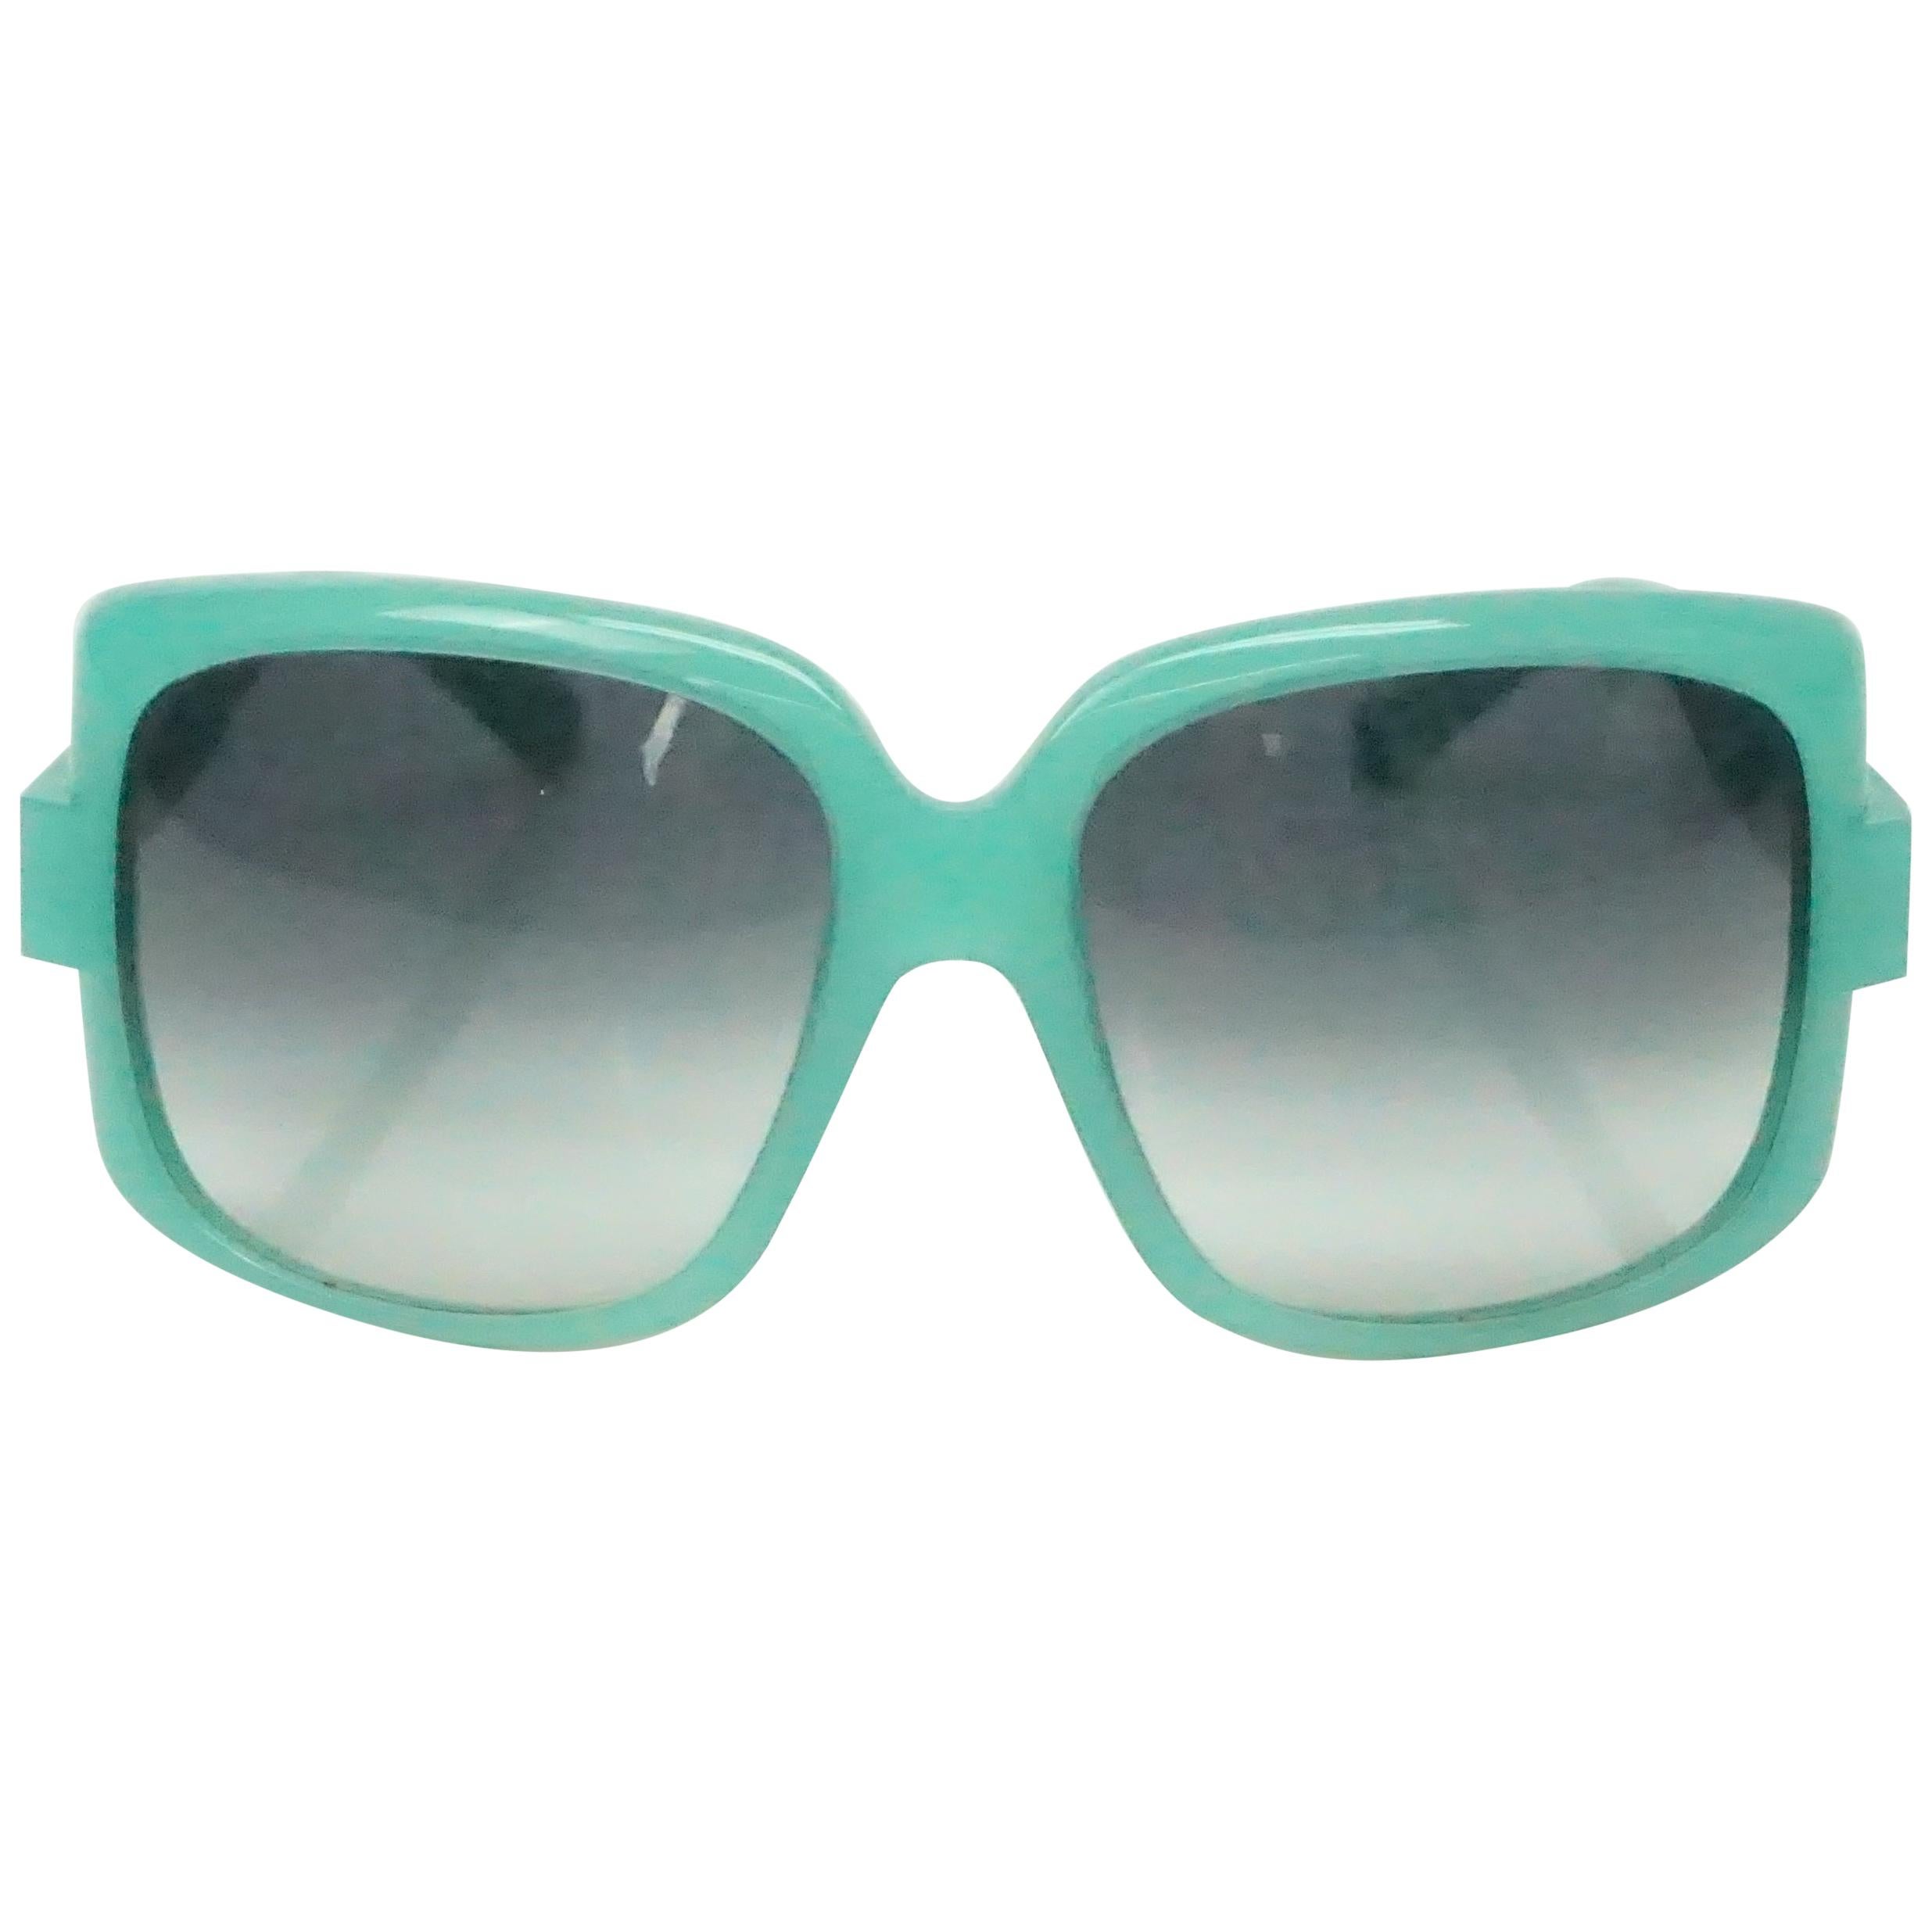 Christian Dior 60's Turquoise Square Sunglasses